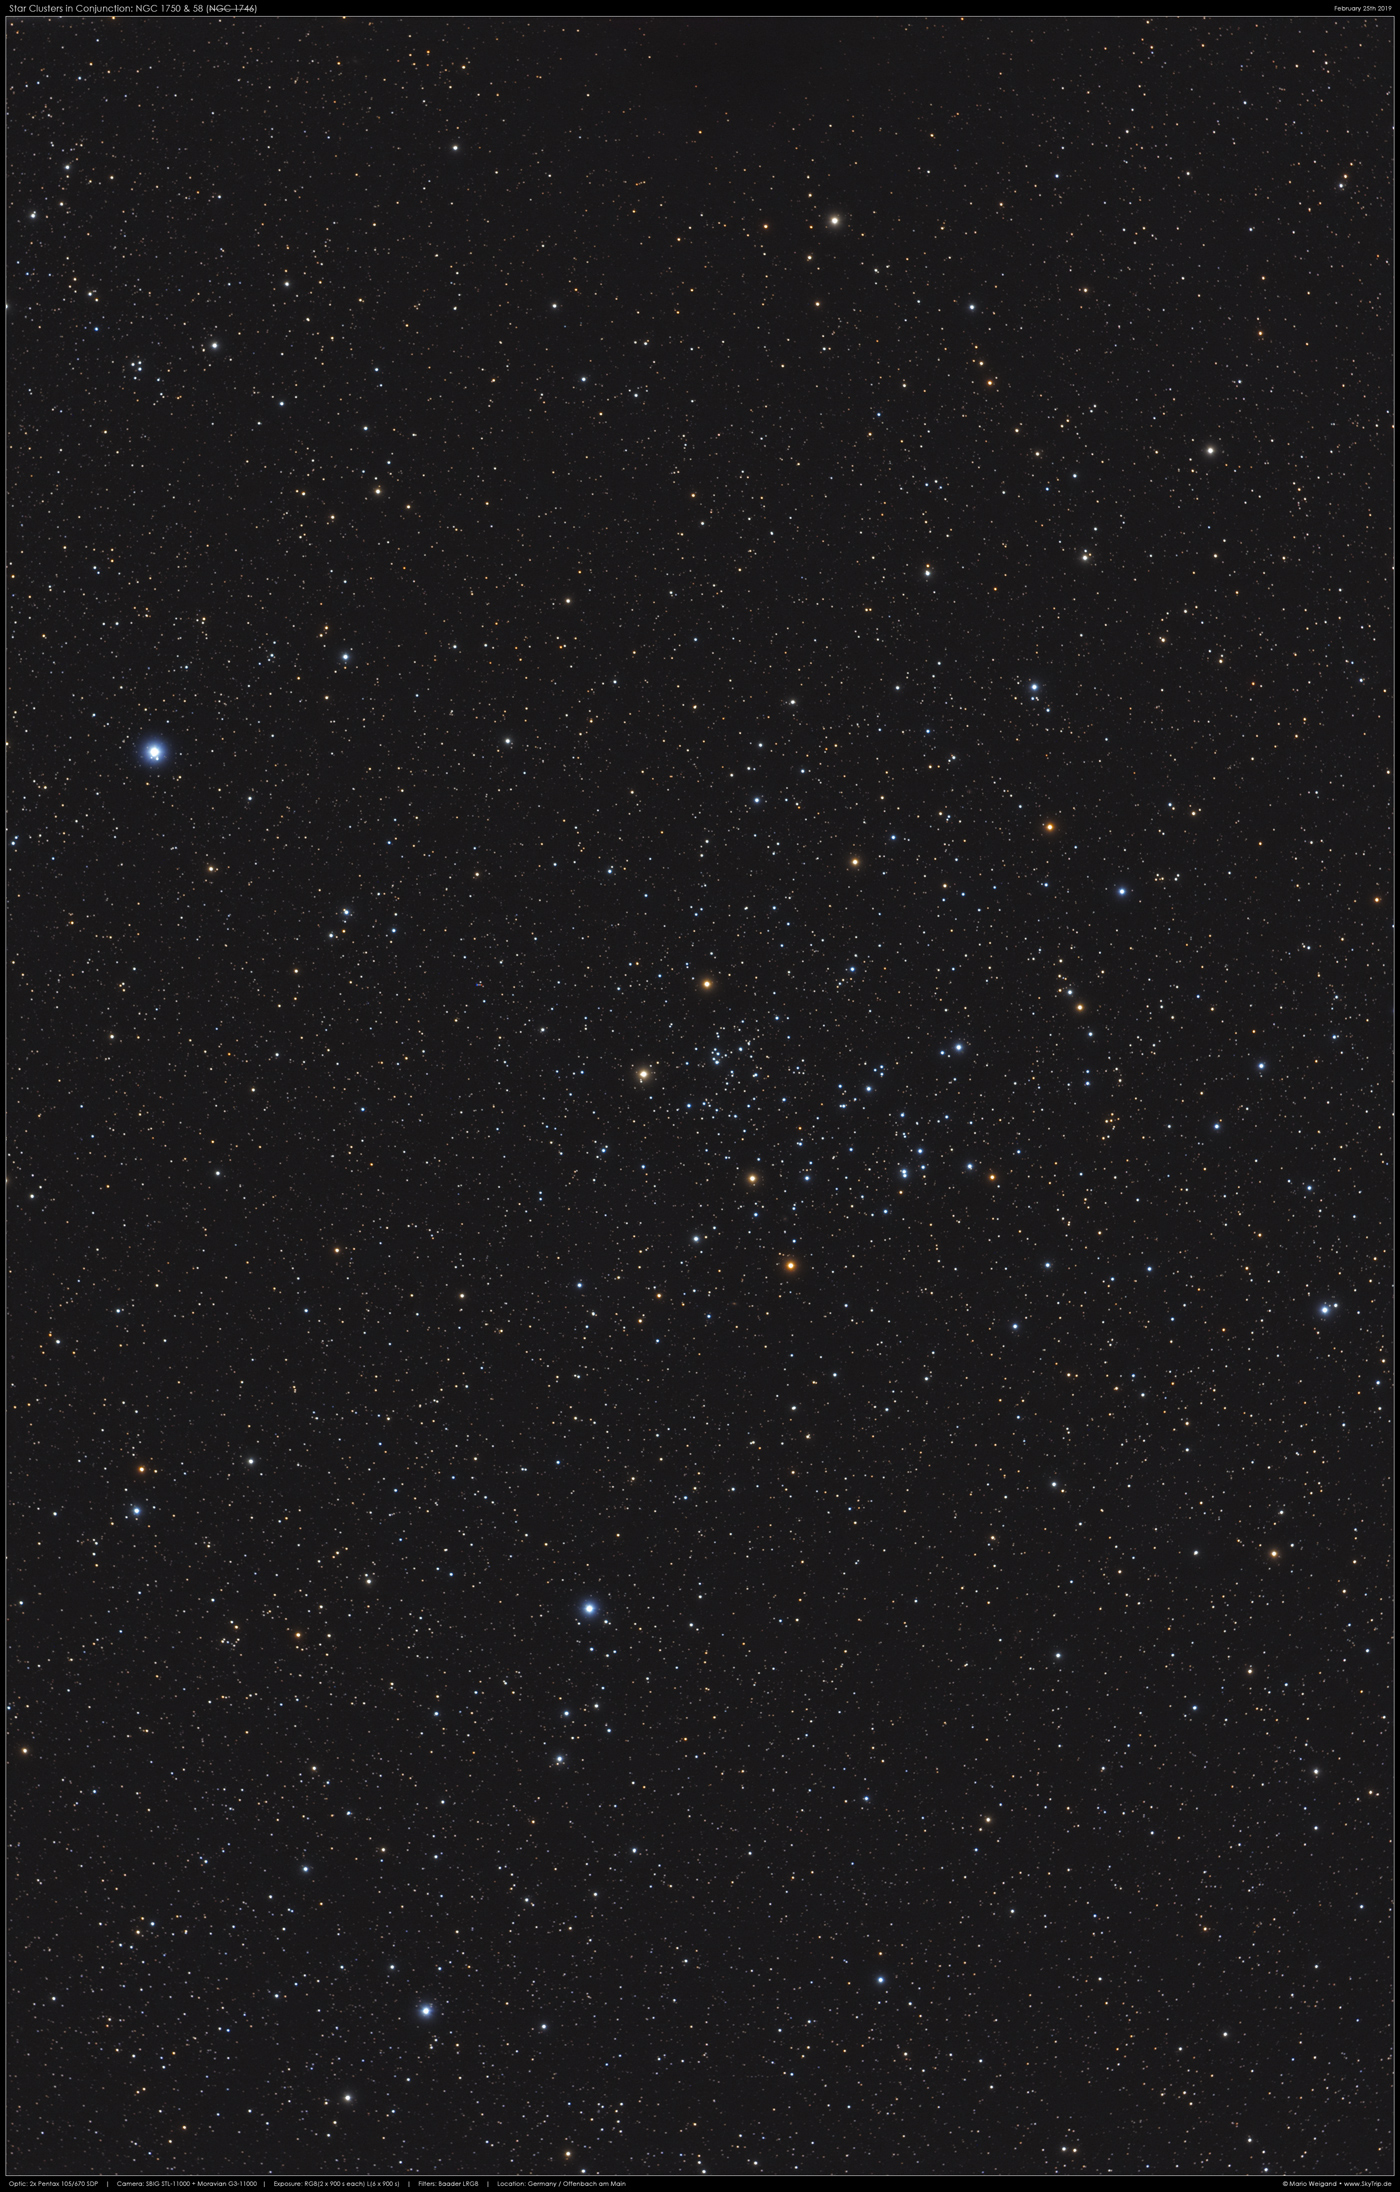 NGC 1746/1750/1758 im Stier